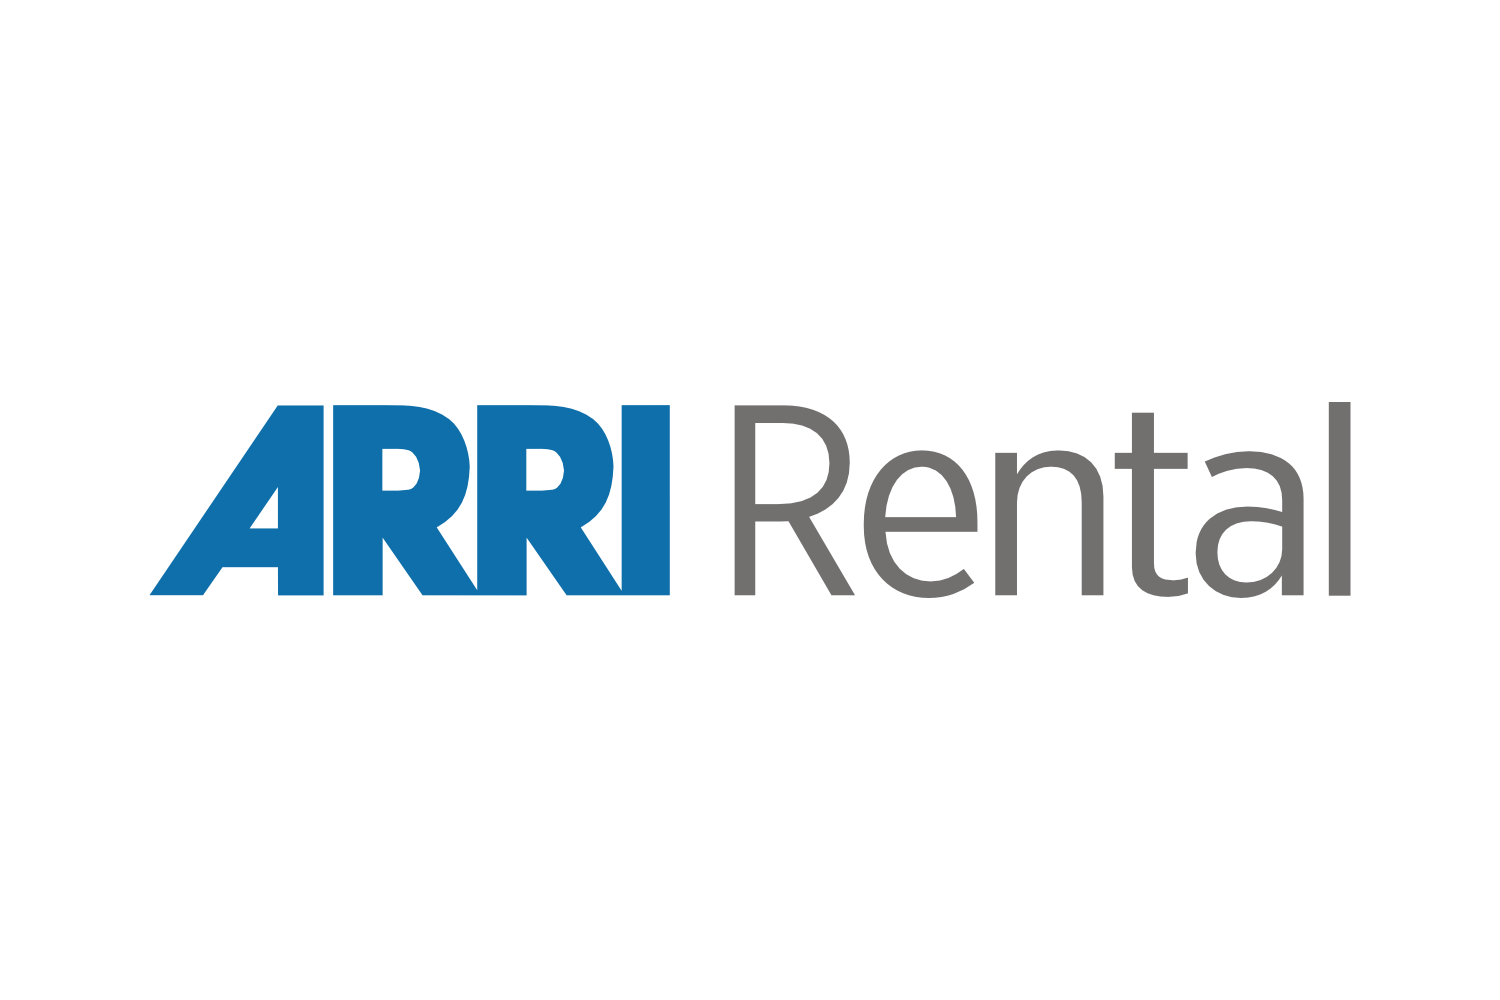 ARRI Rental (sq).png